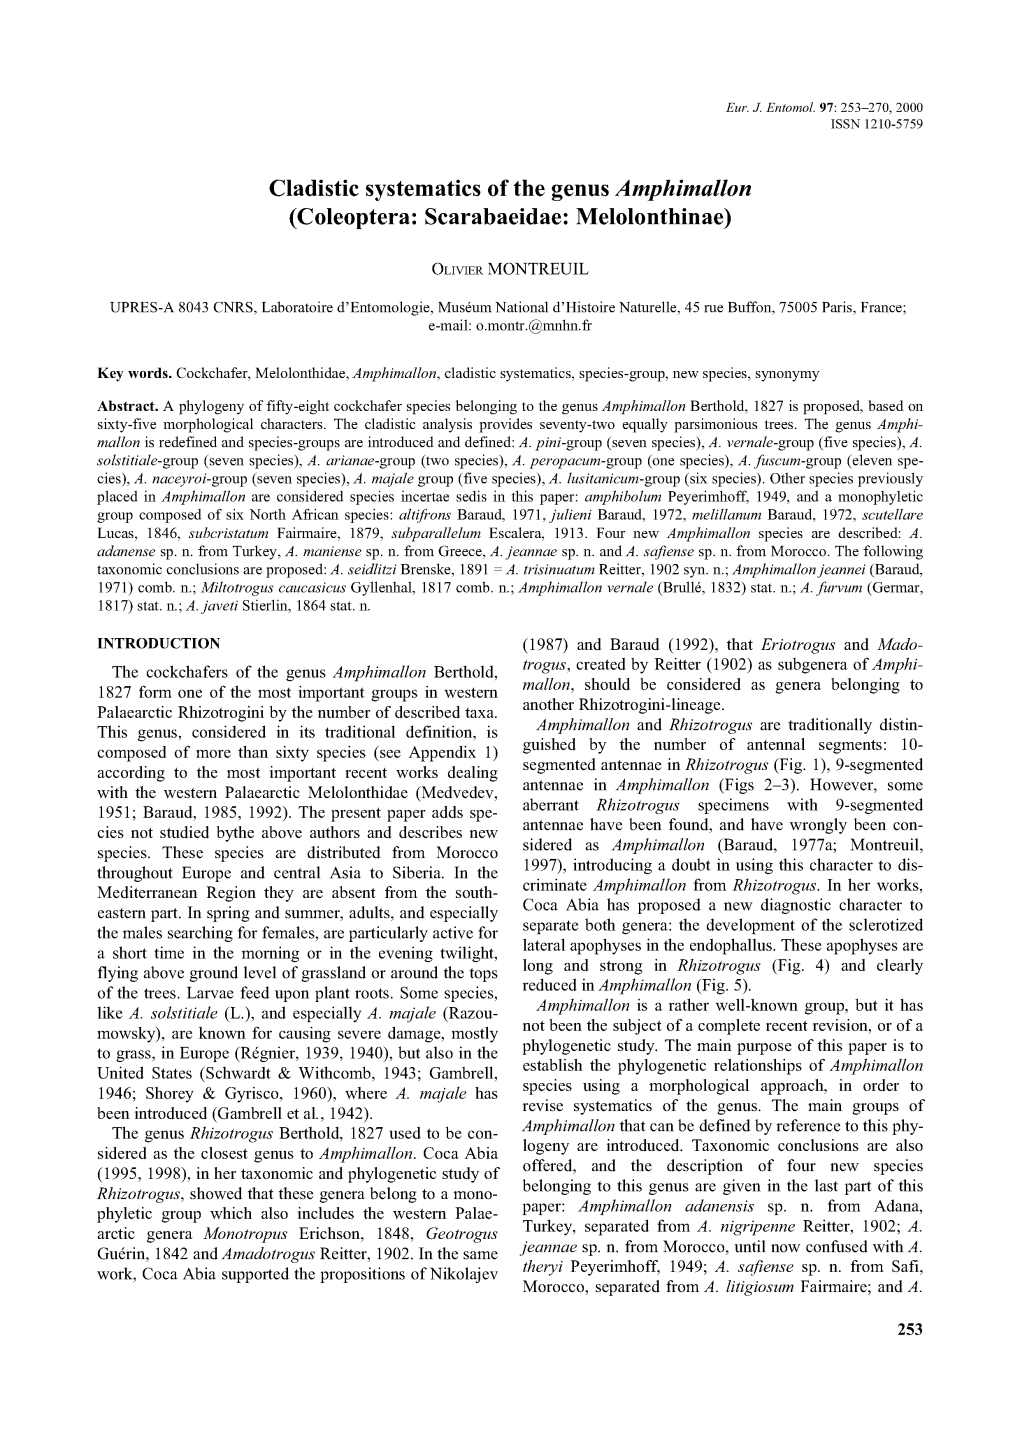 Cladistic Systematics of the Genus Amphimallon